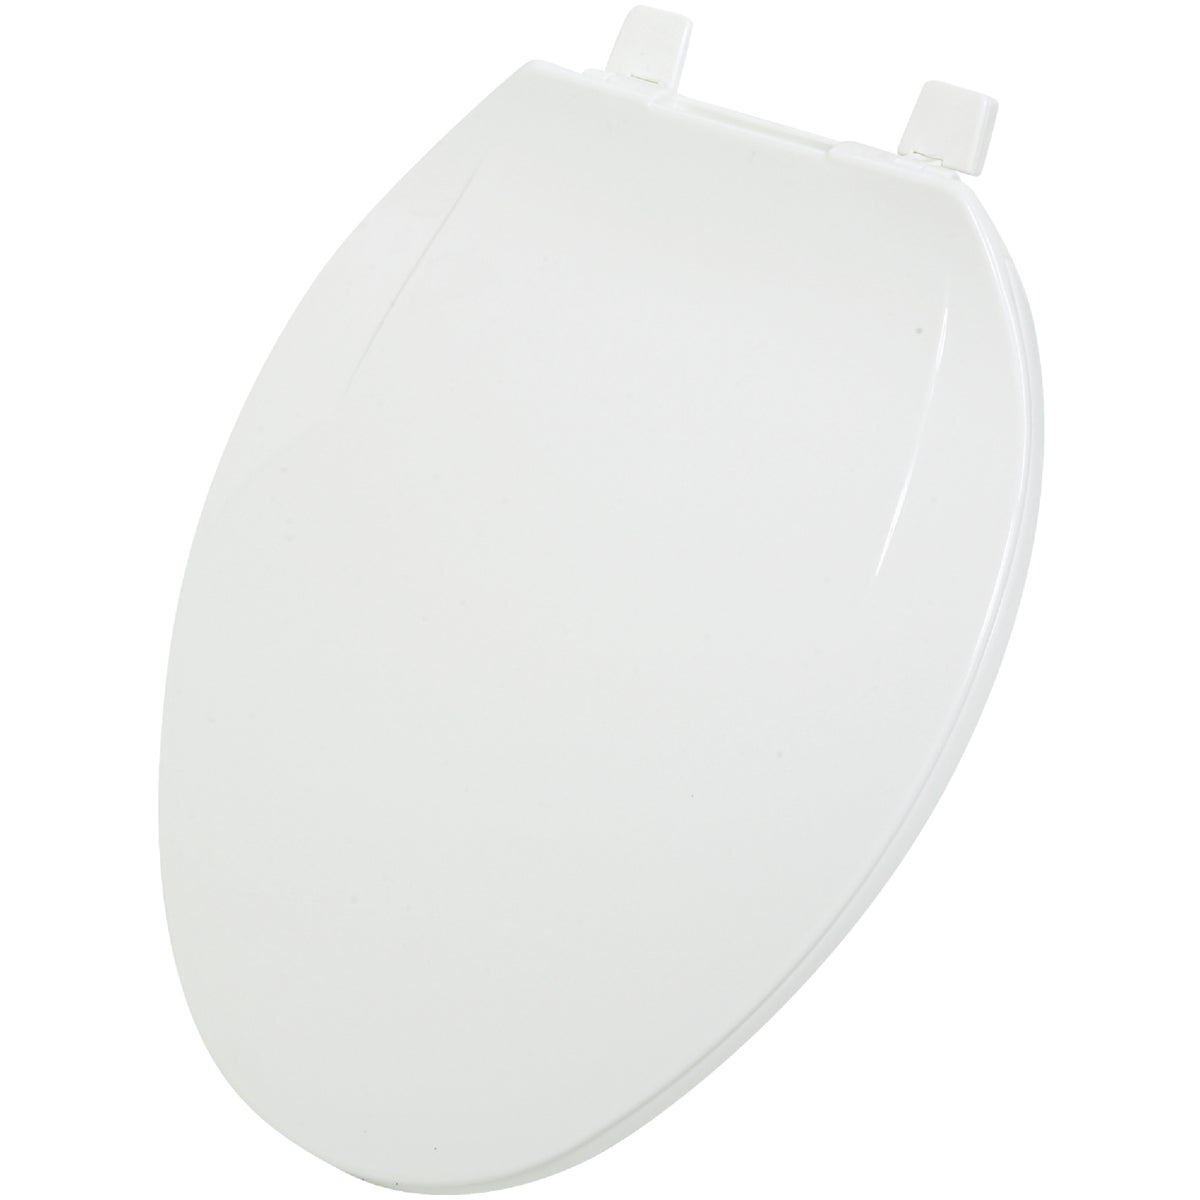 Item 445441, Home Impressions standard grade solid plastic elongated toilet seat.